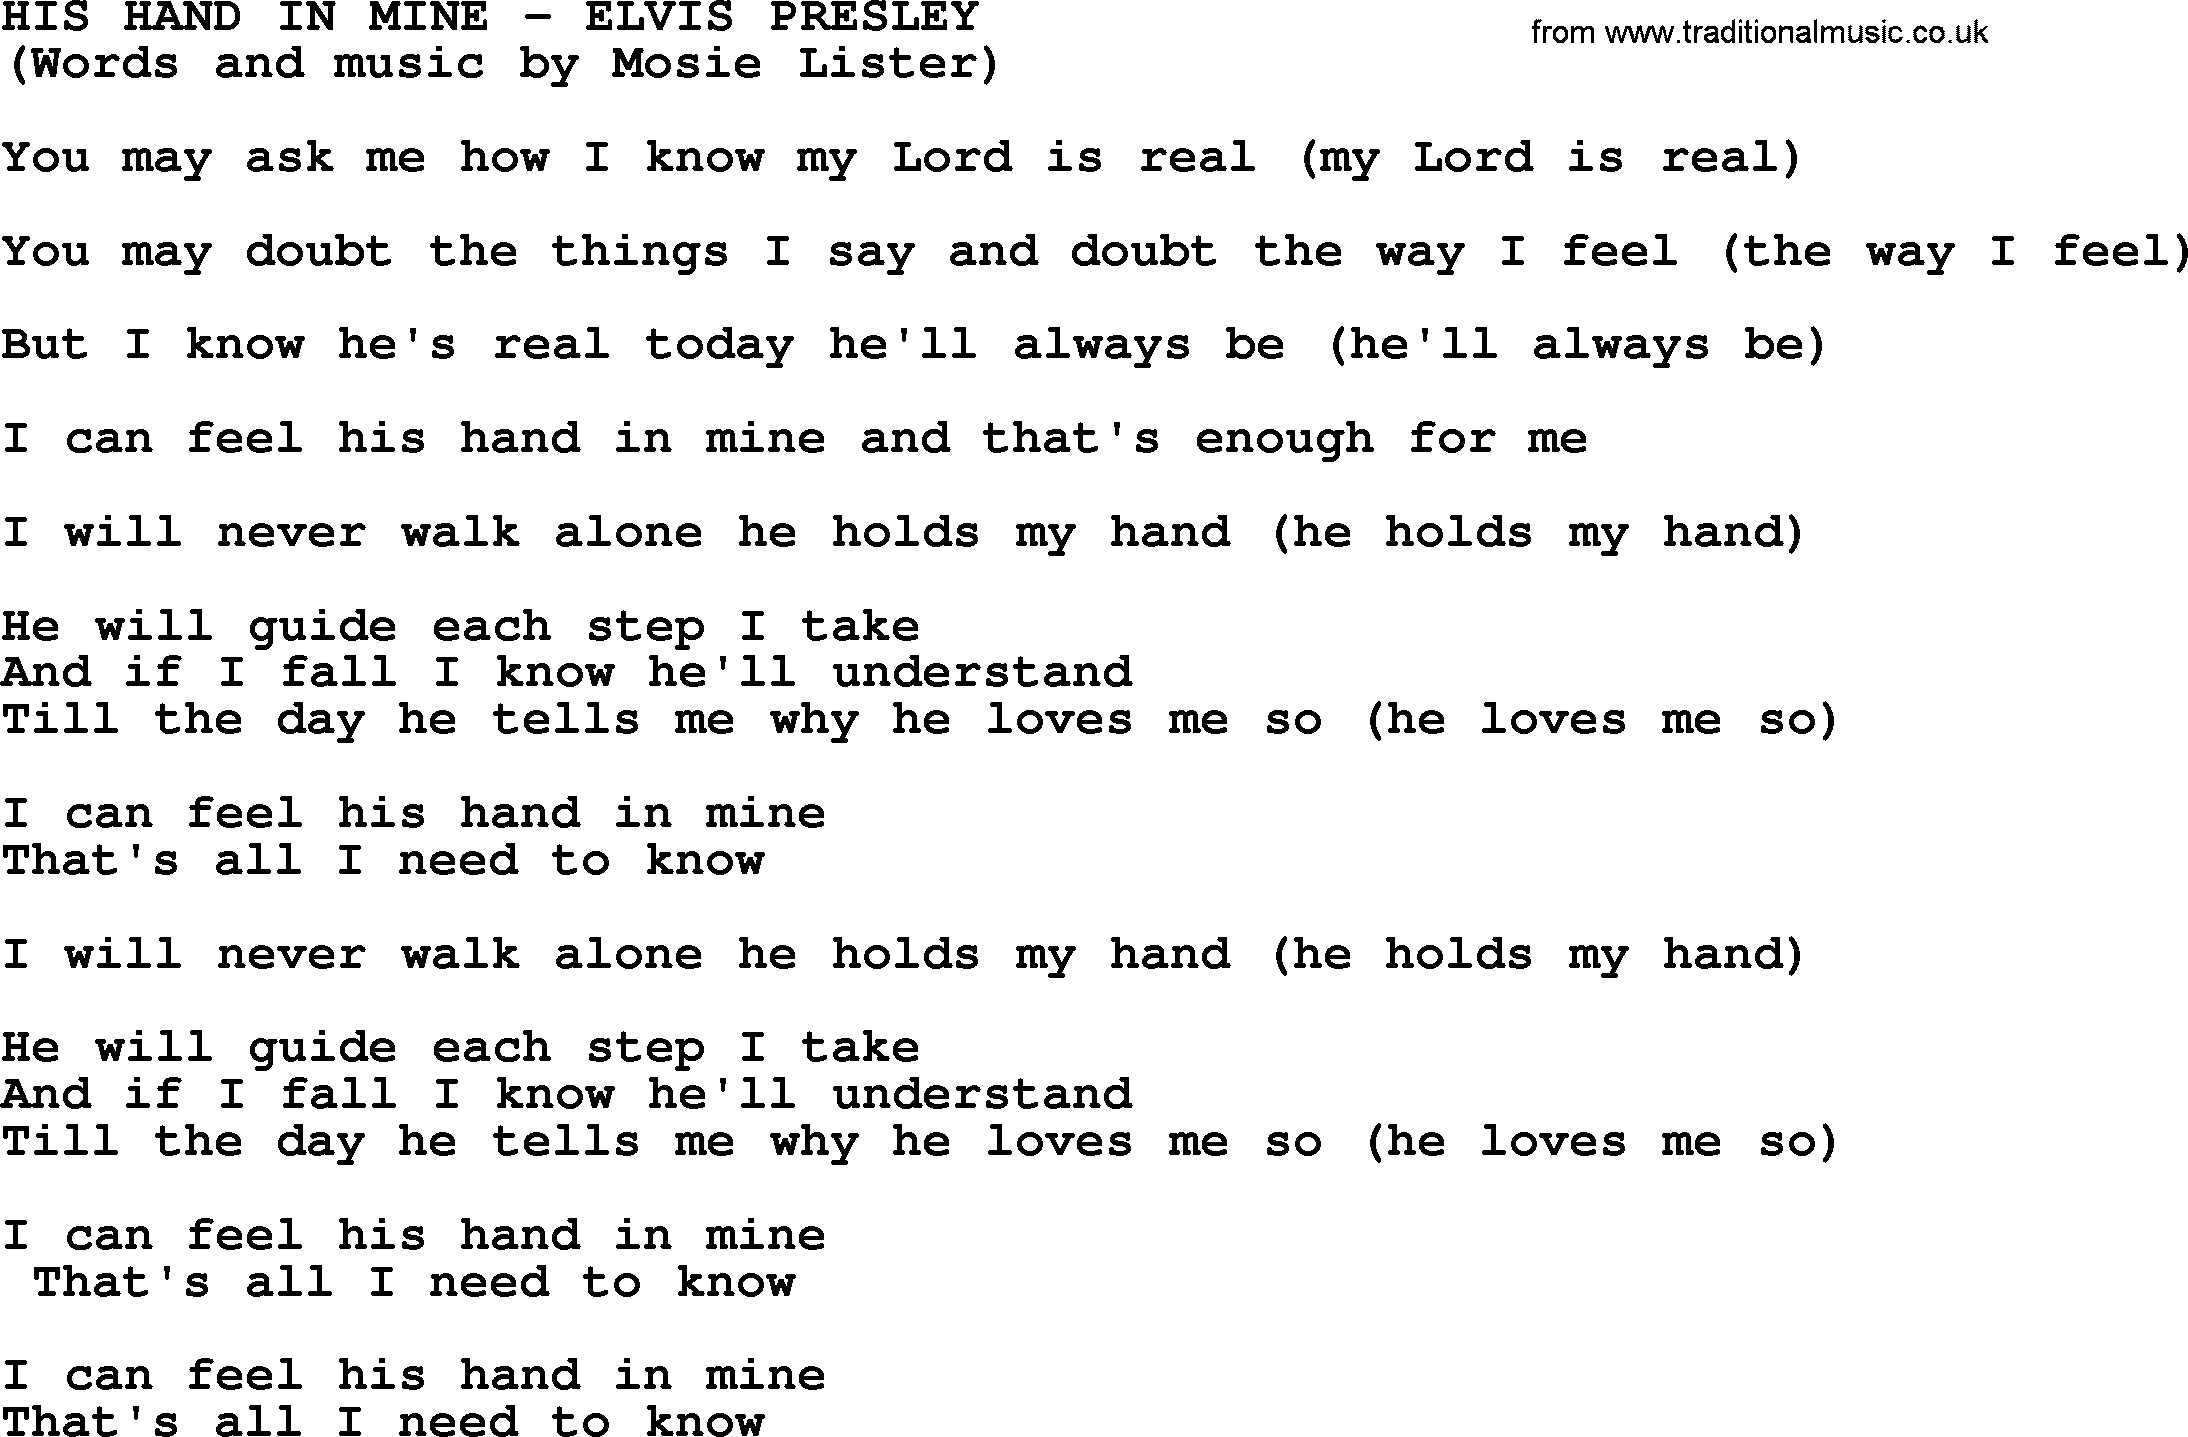 Elvis Presley song: His Hand In Mine lyrics